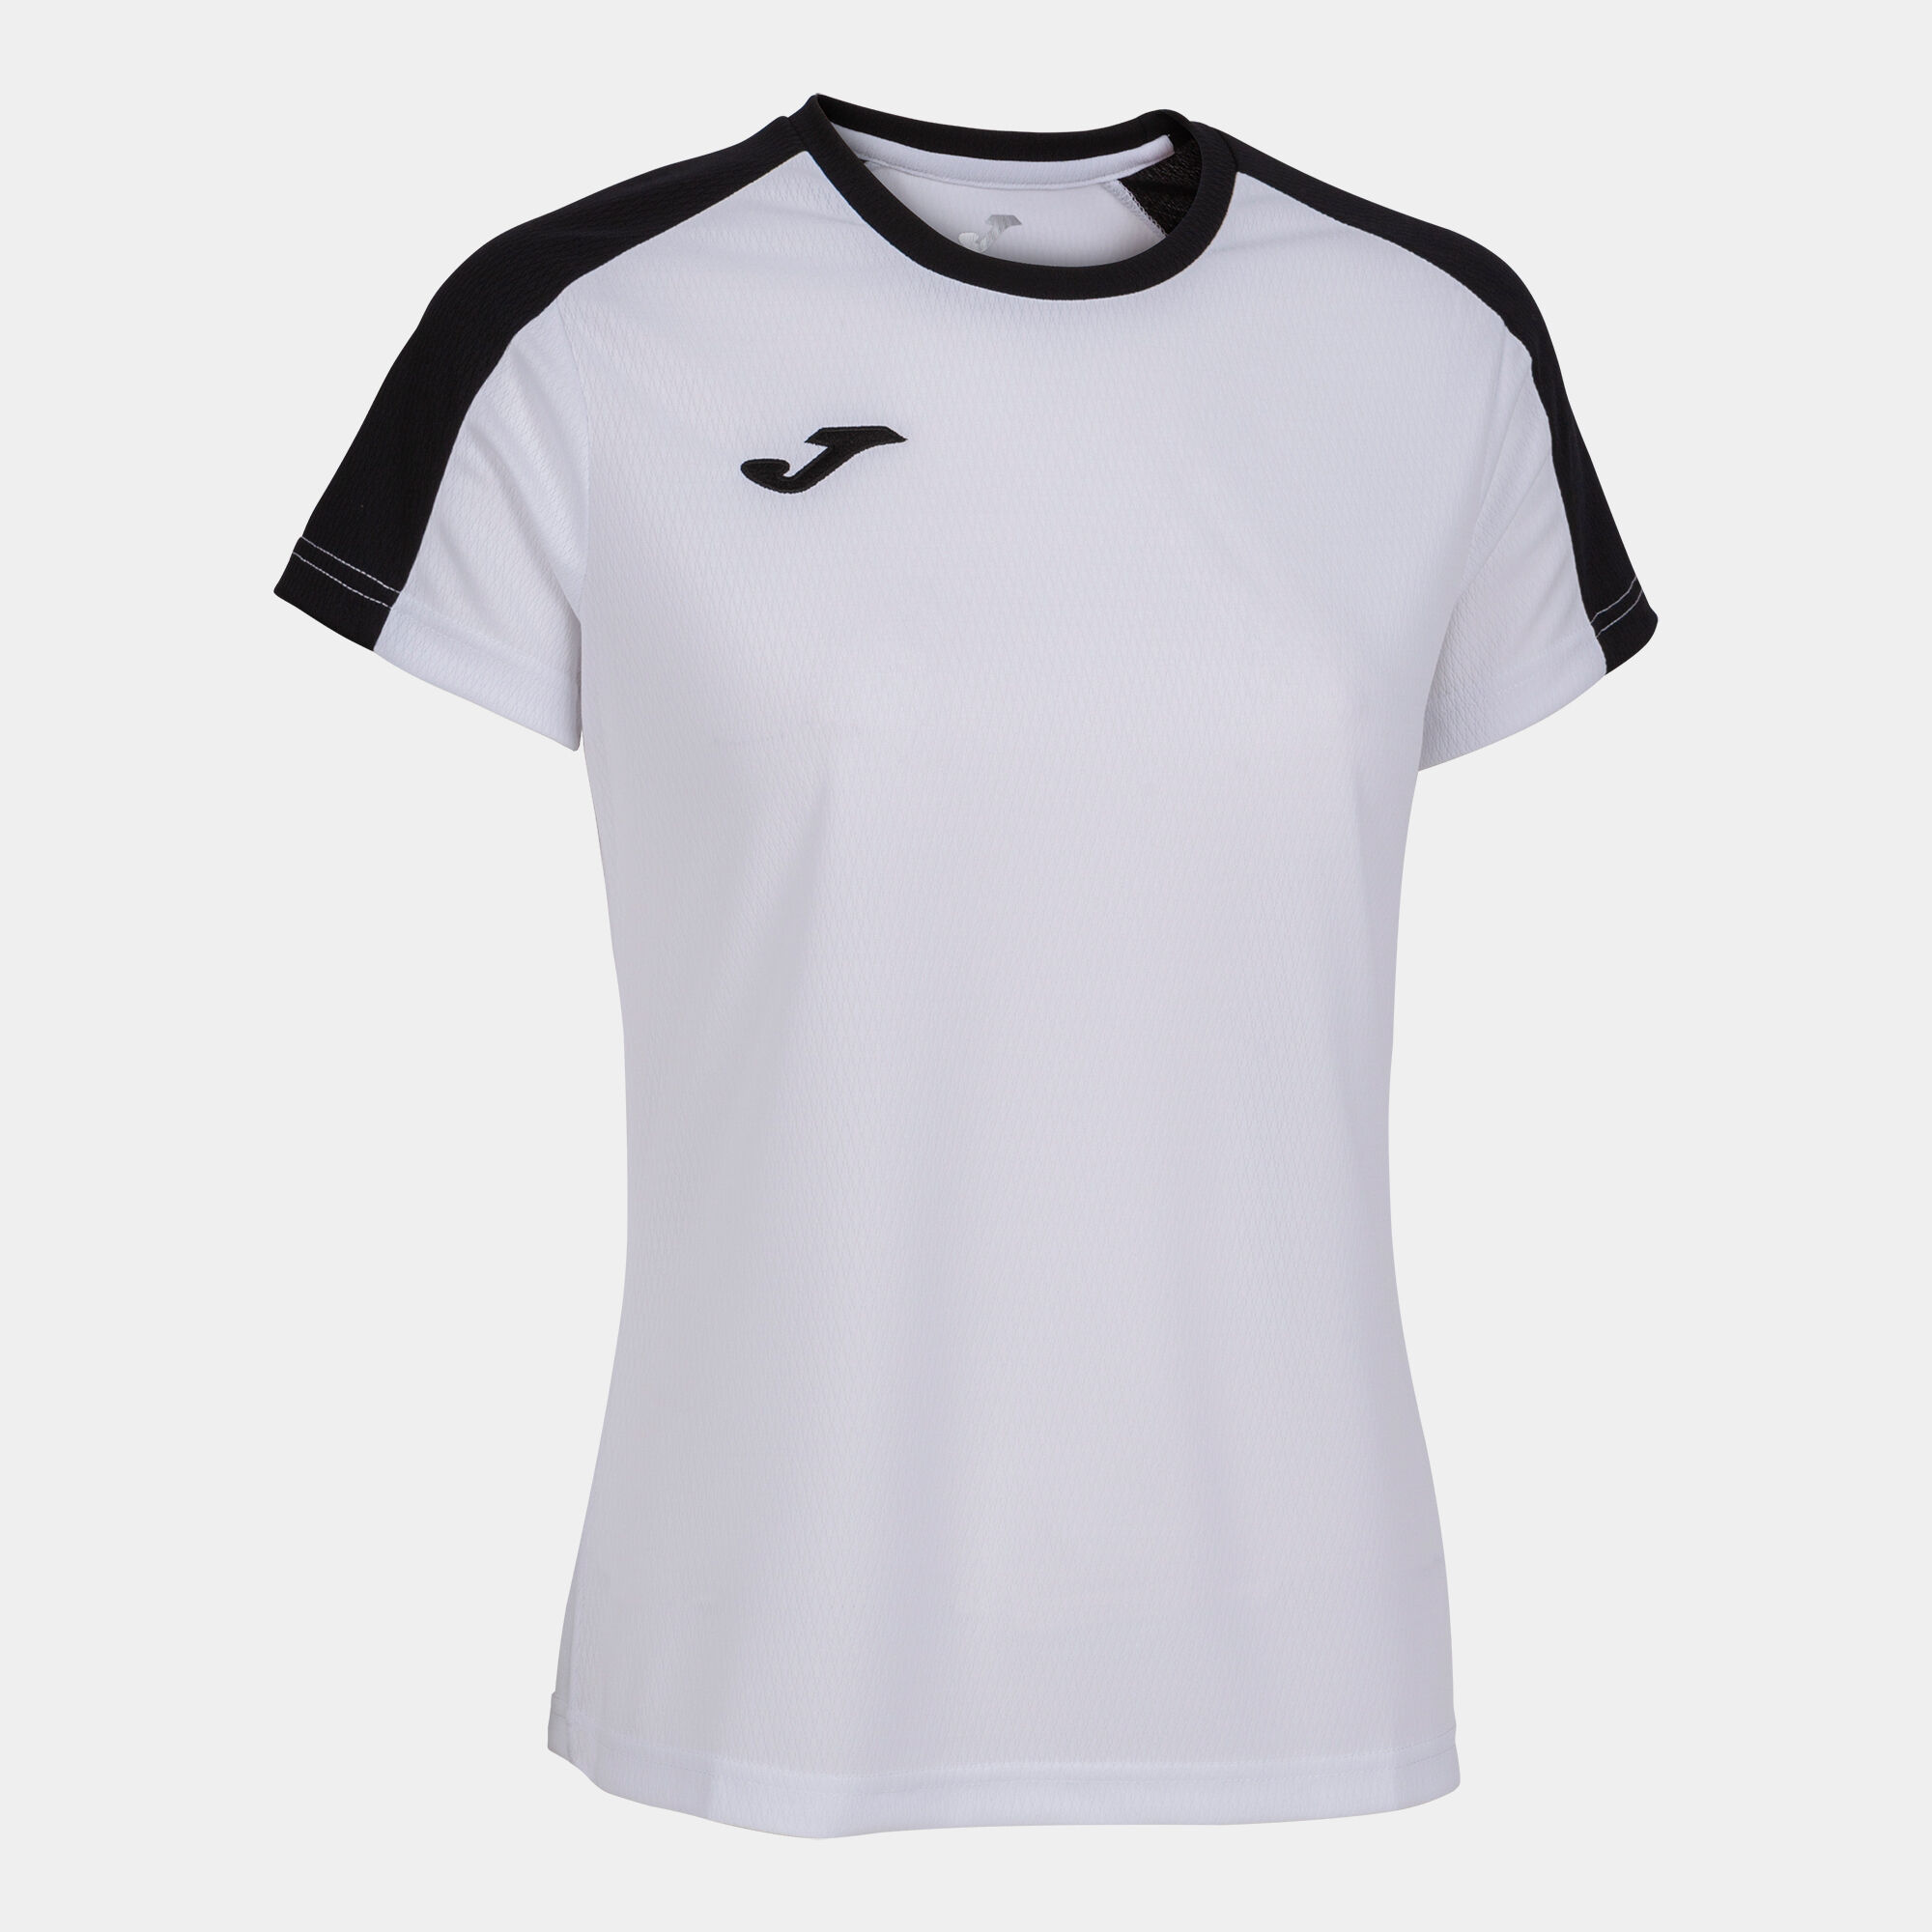 T-shirt manga curta mulher Eco Championship branco preto